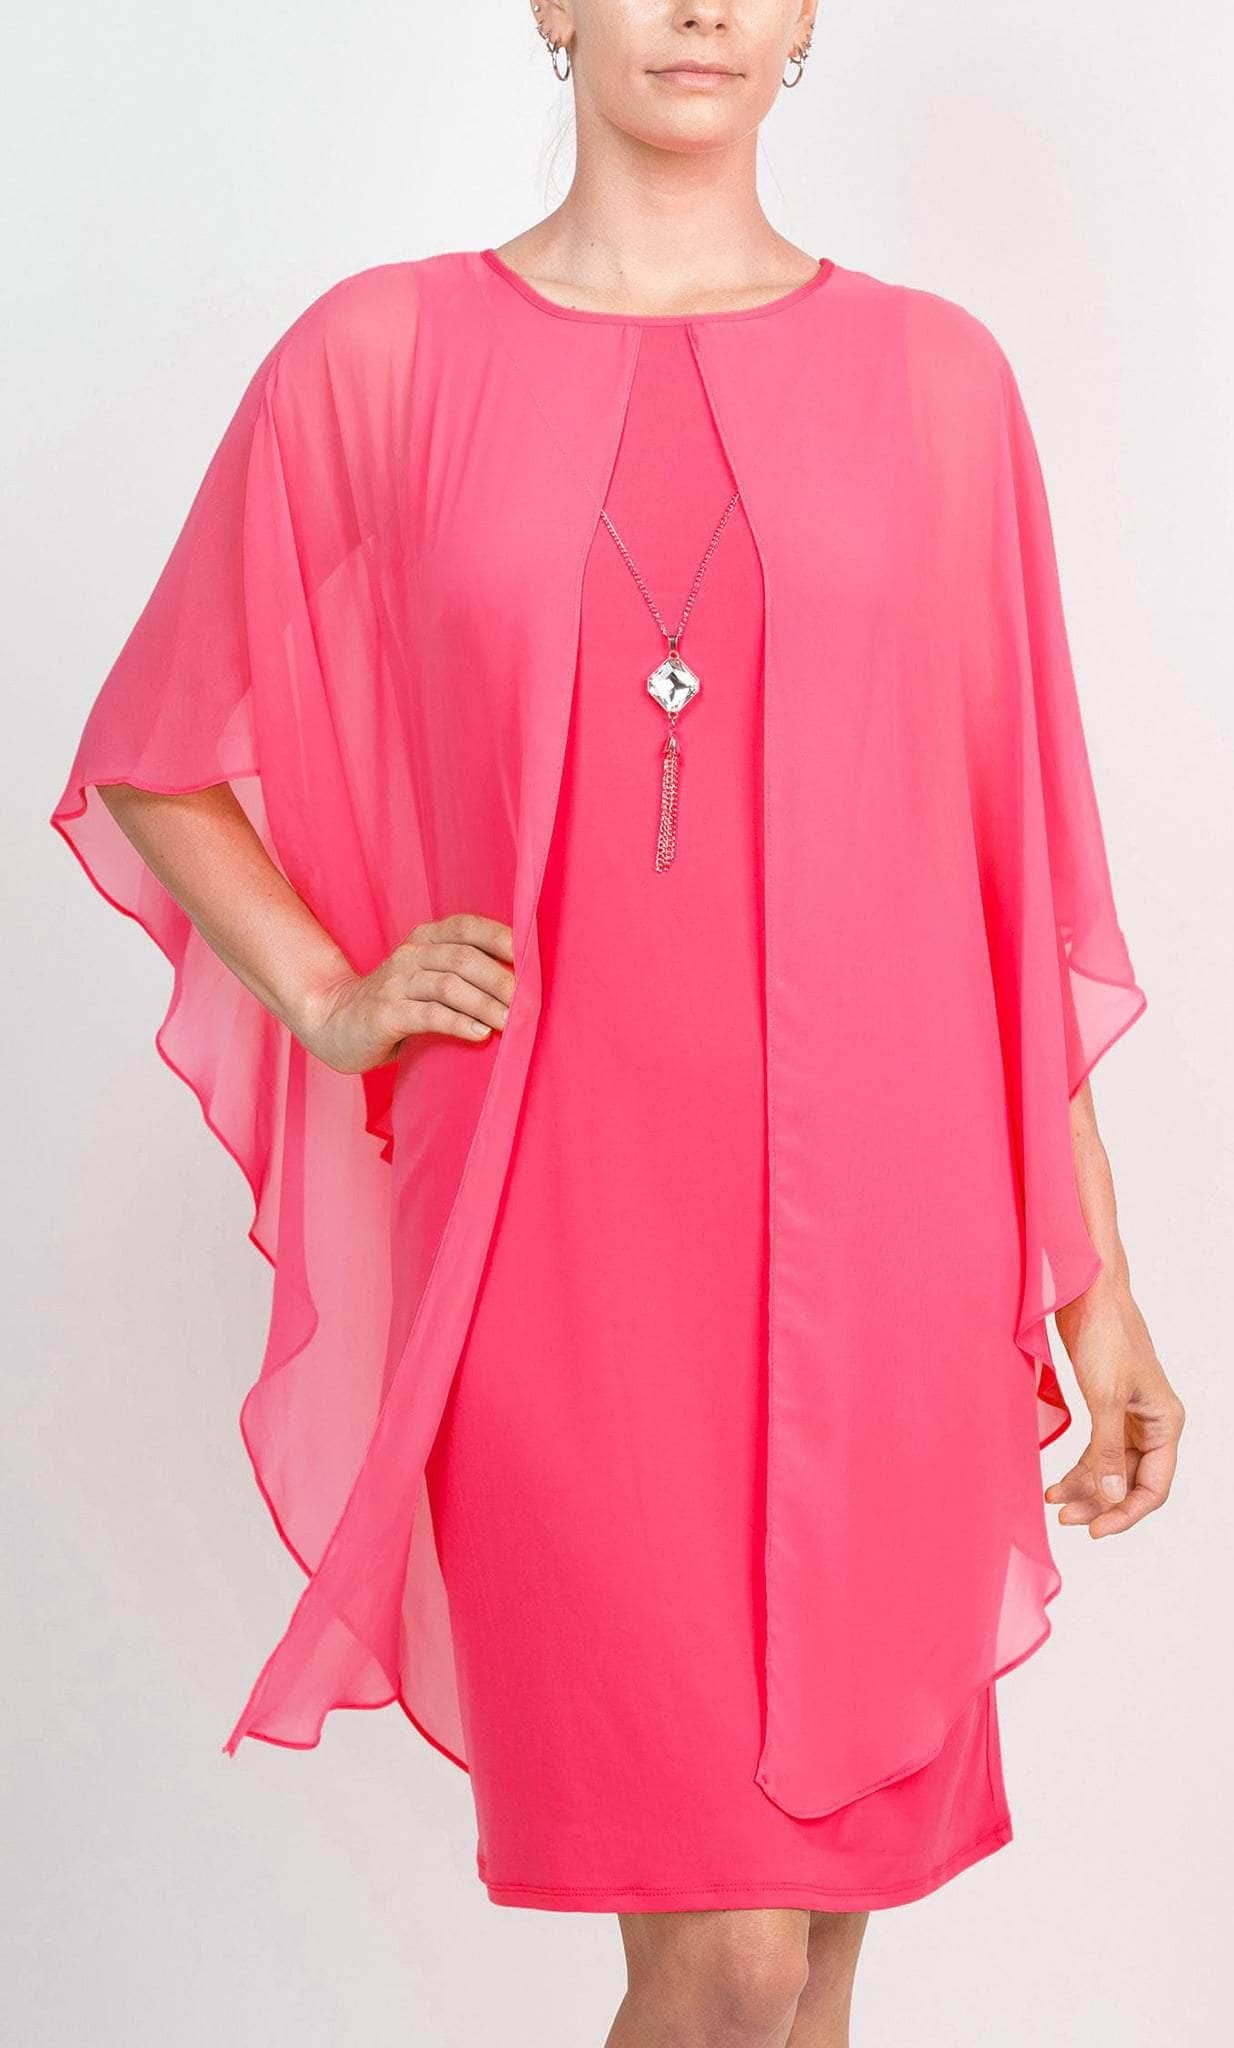 Glamour G0N406 - Cape Sleeve Sheath Formal Dress Holiday Dresses 10 / Hot Pink